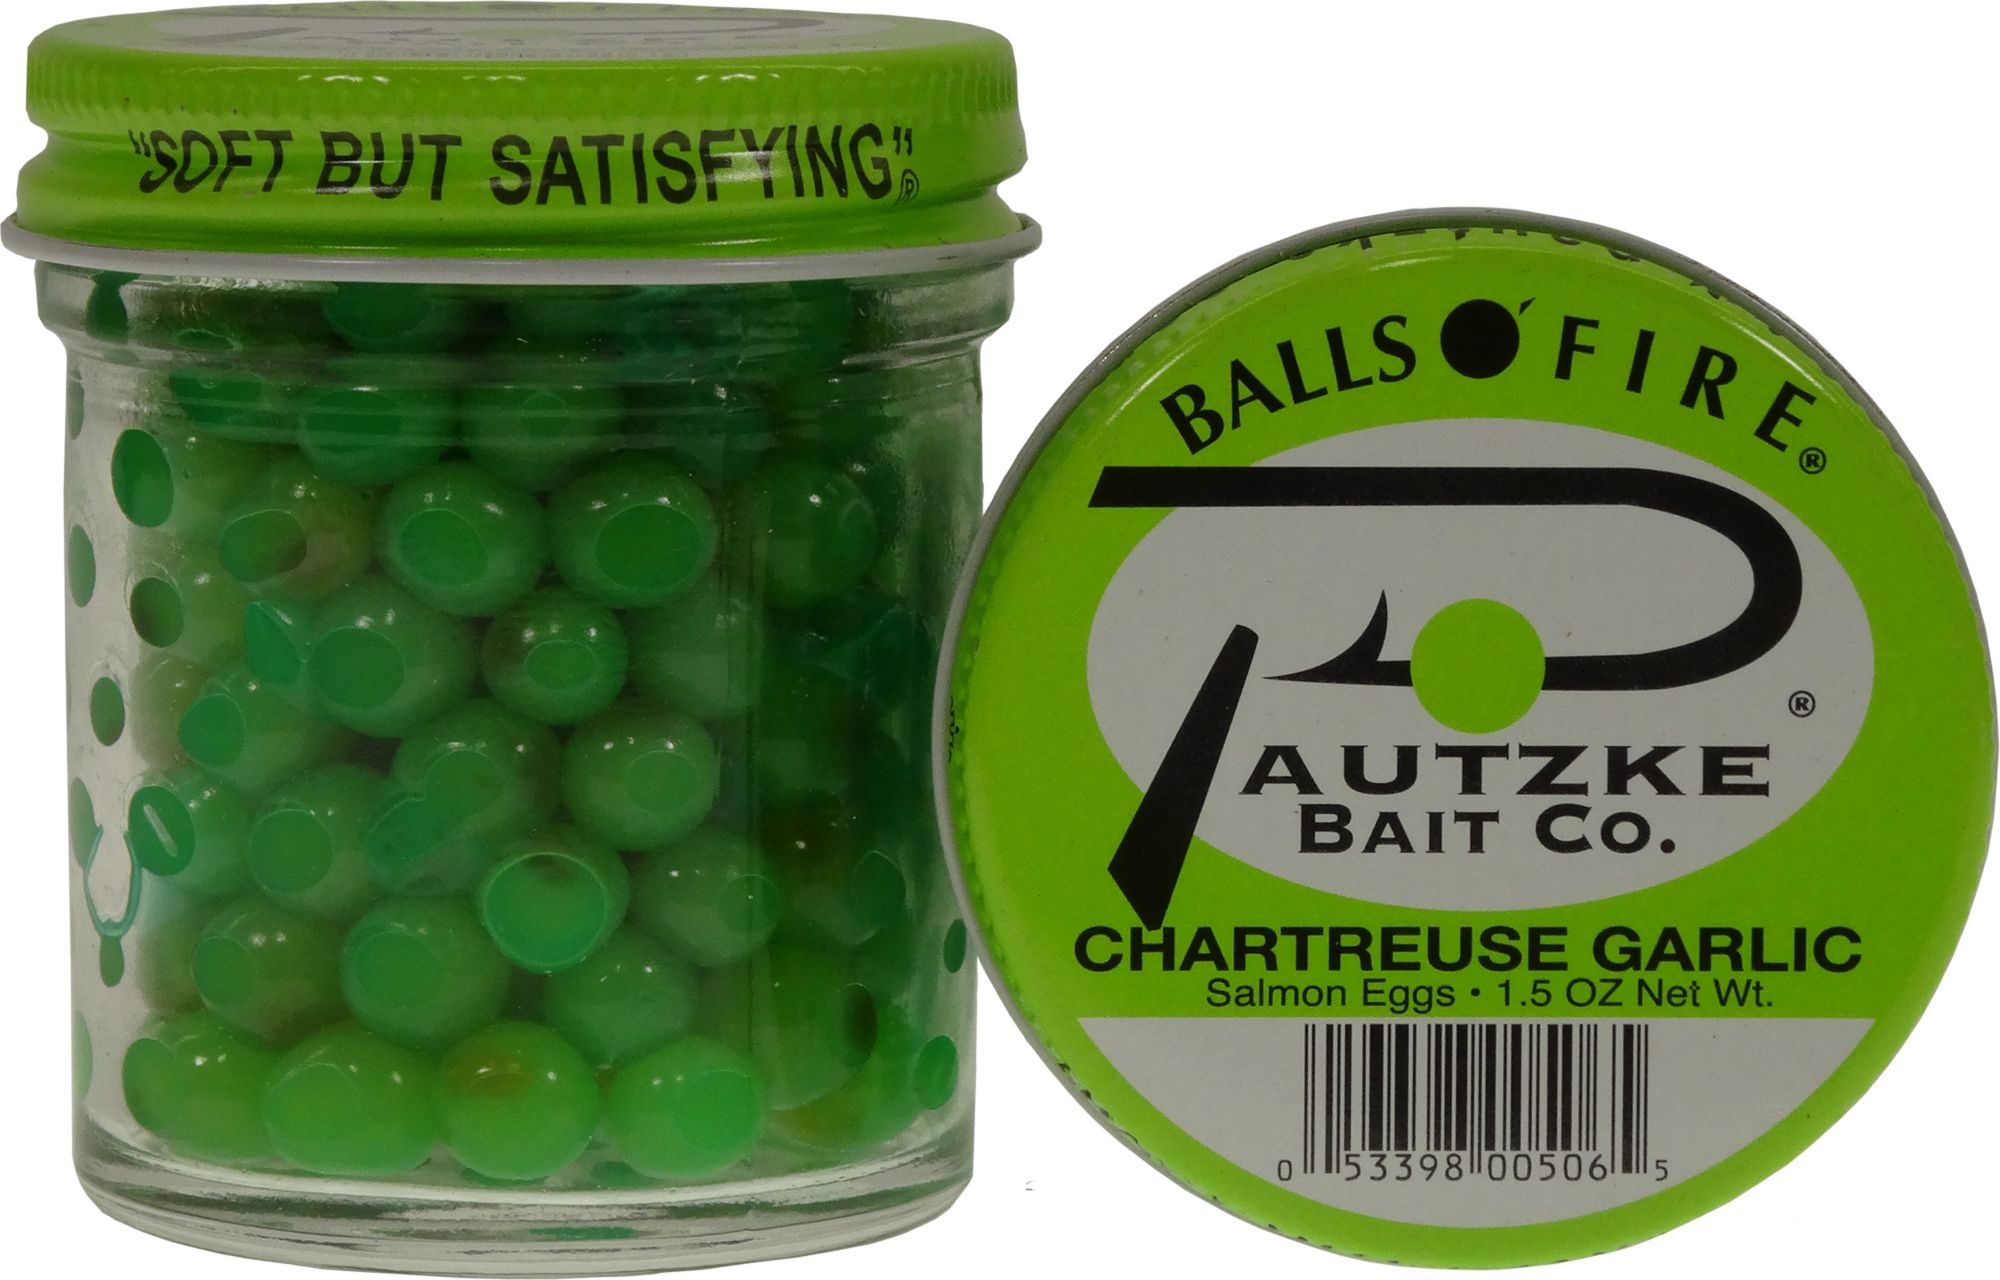 Pautzke Balls O' Fire Chartreuse Garlic Salmon Eggs